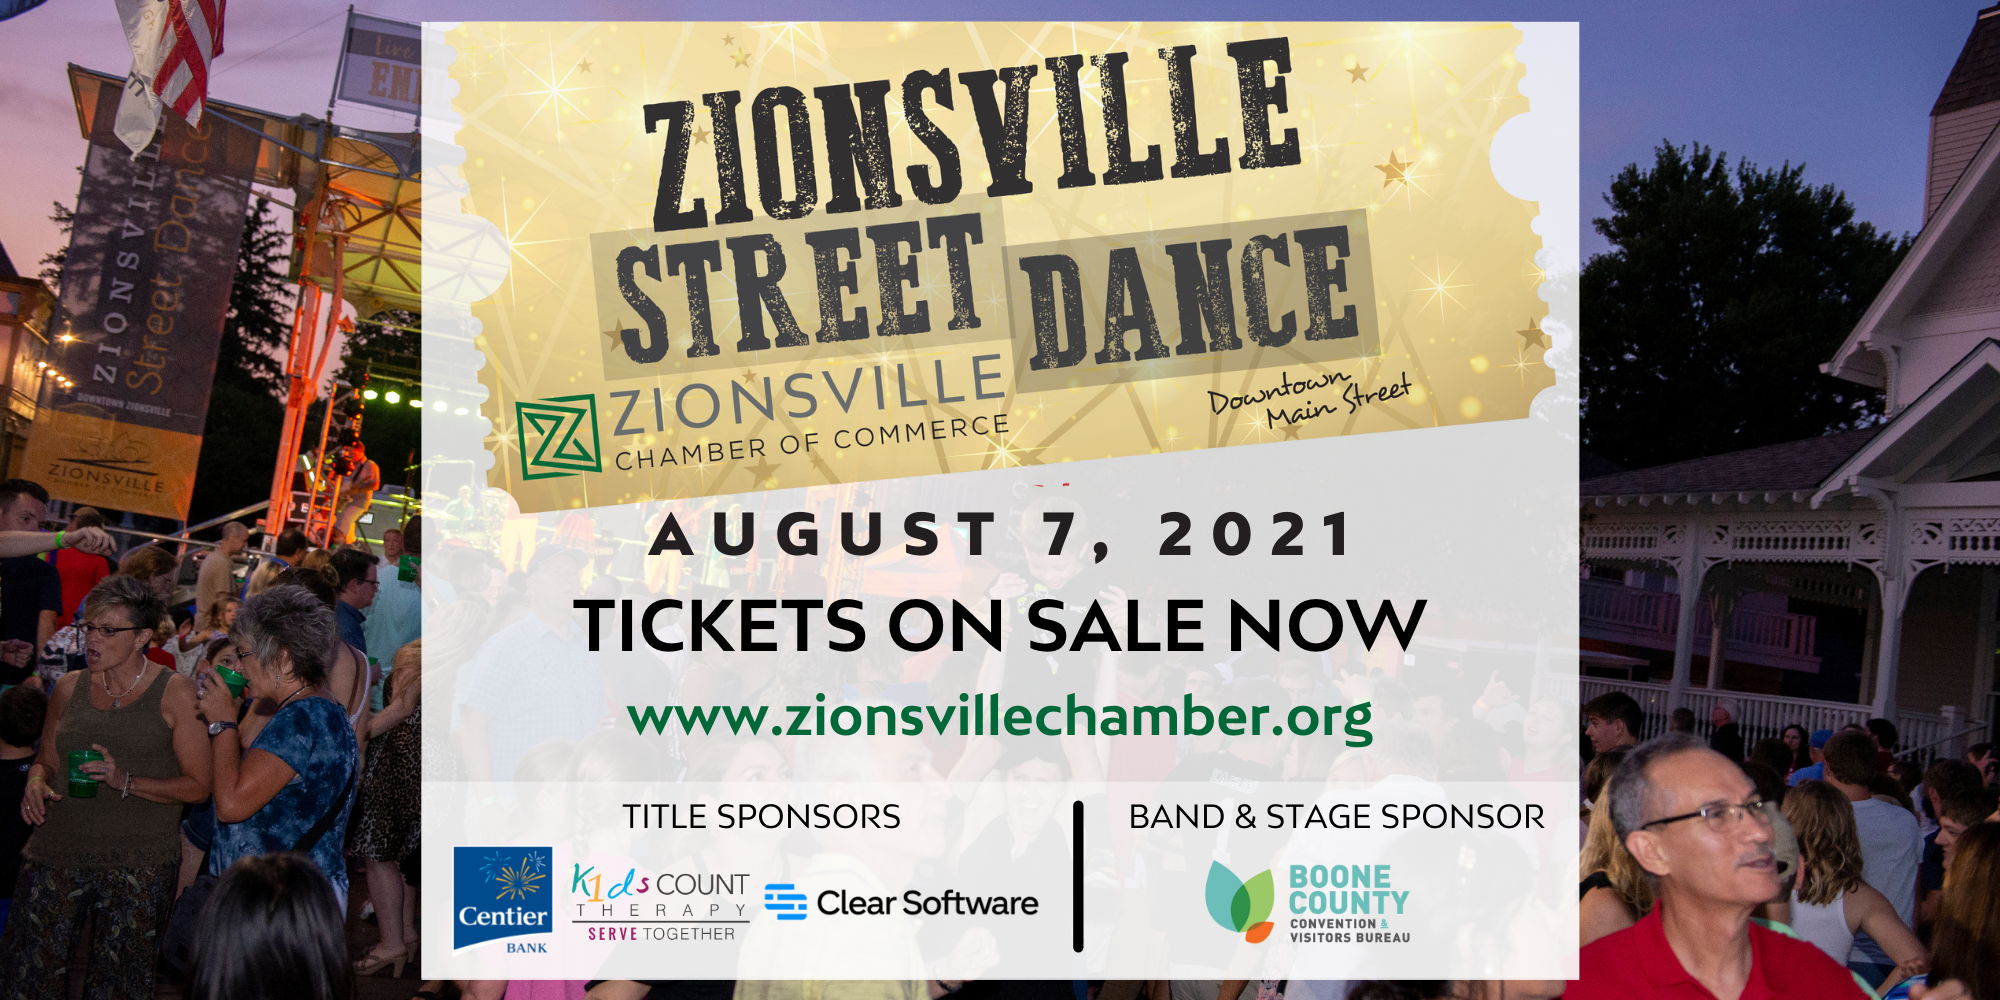 Zionsville Street Dance 2021 promotional image